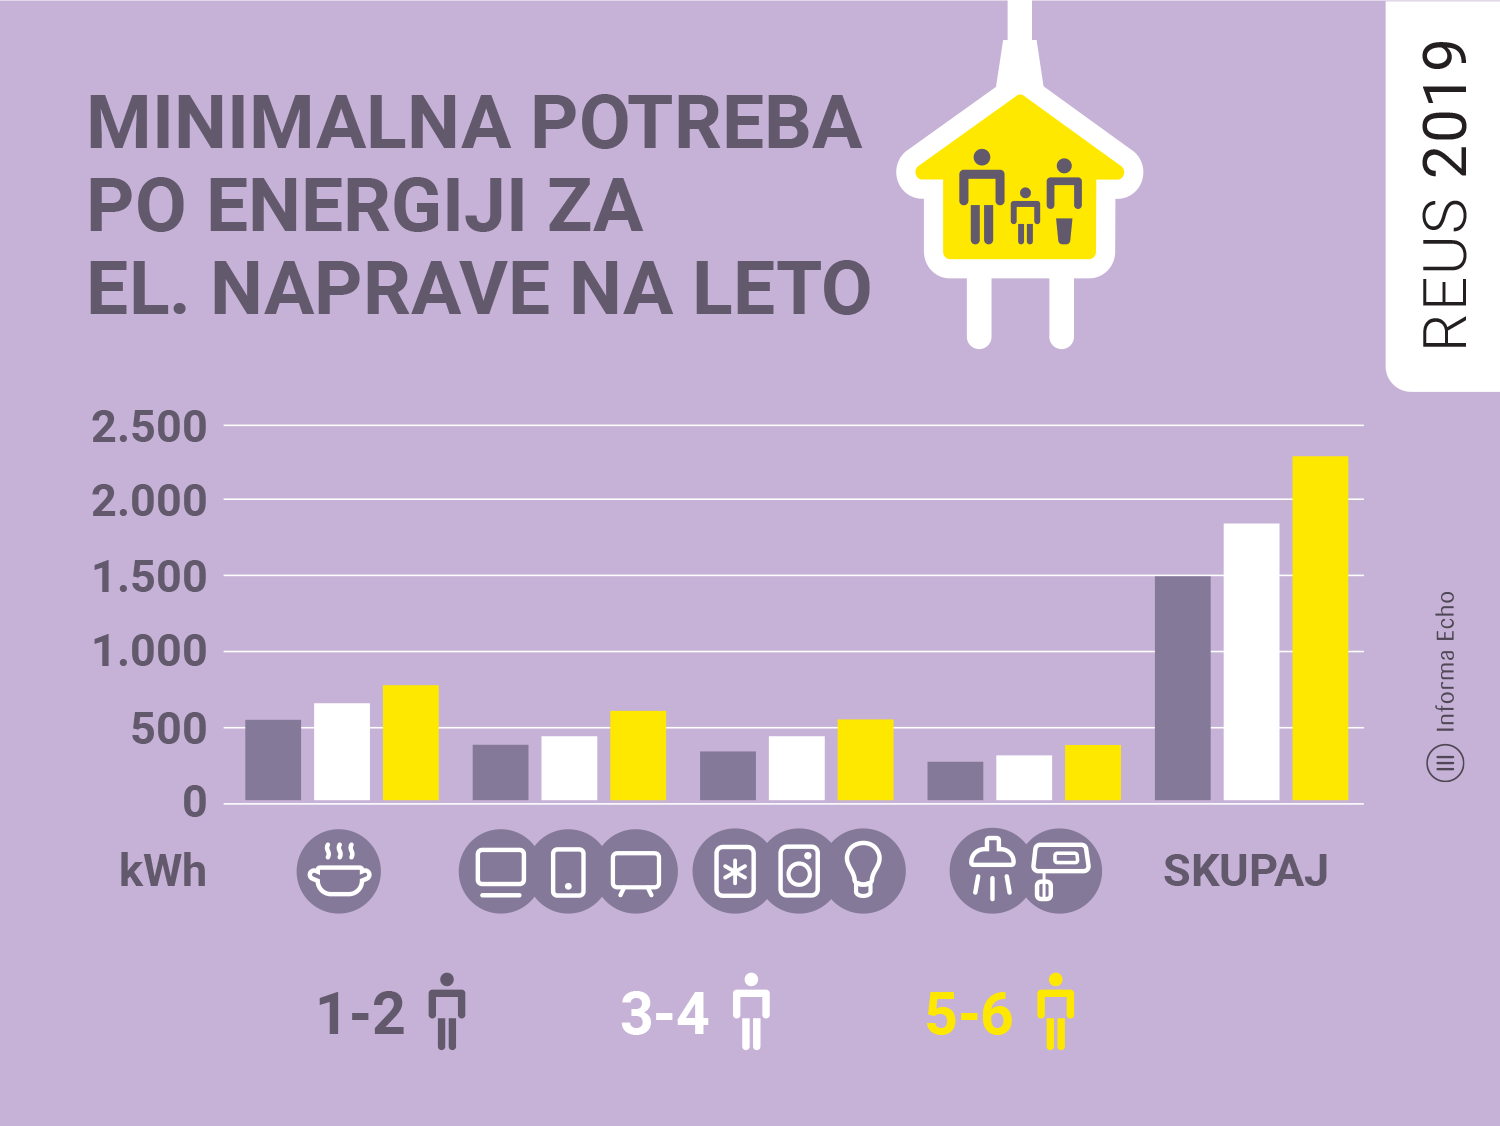 Minimalna potreba po energiji za eno gospodinjstvo / Raziskava REUS 2019